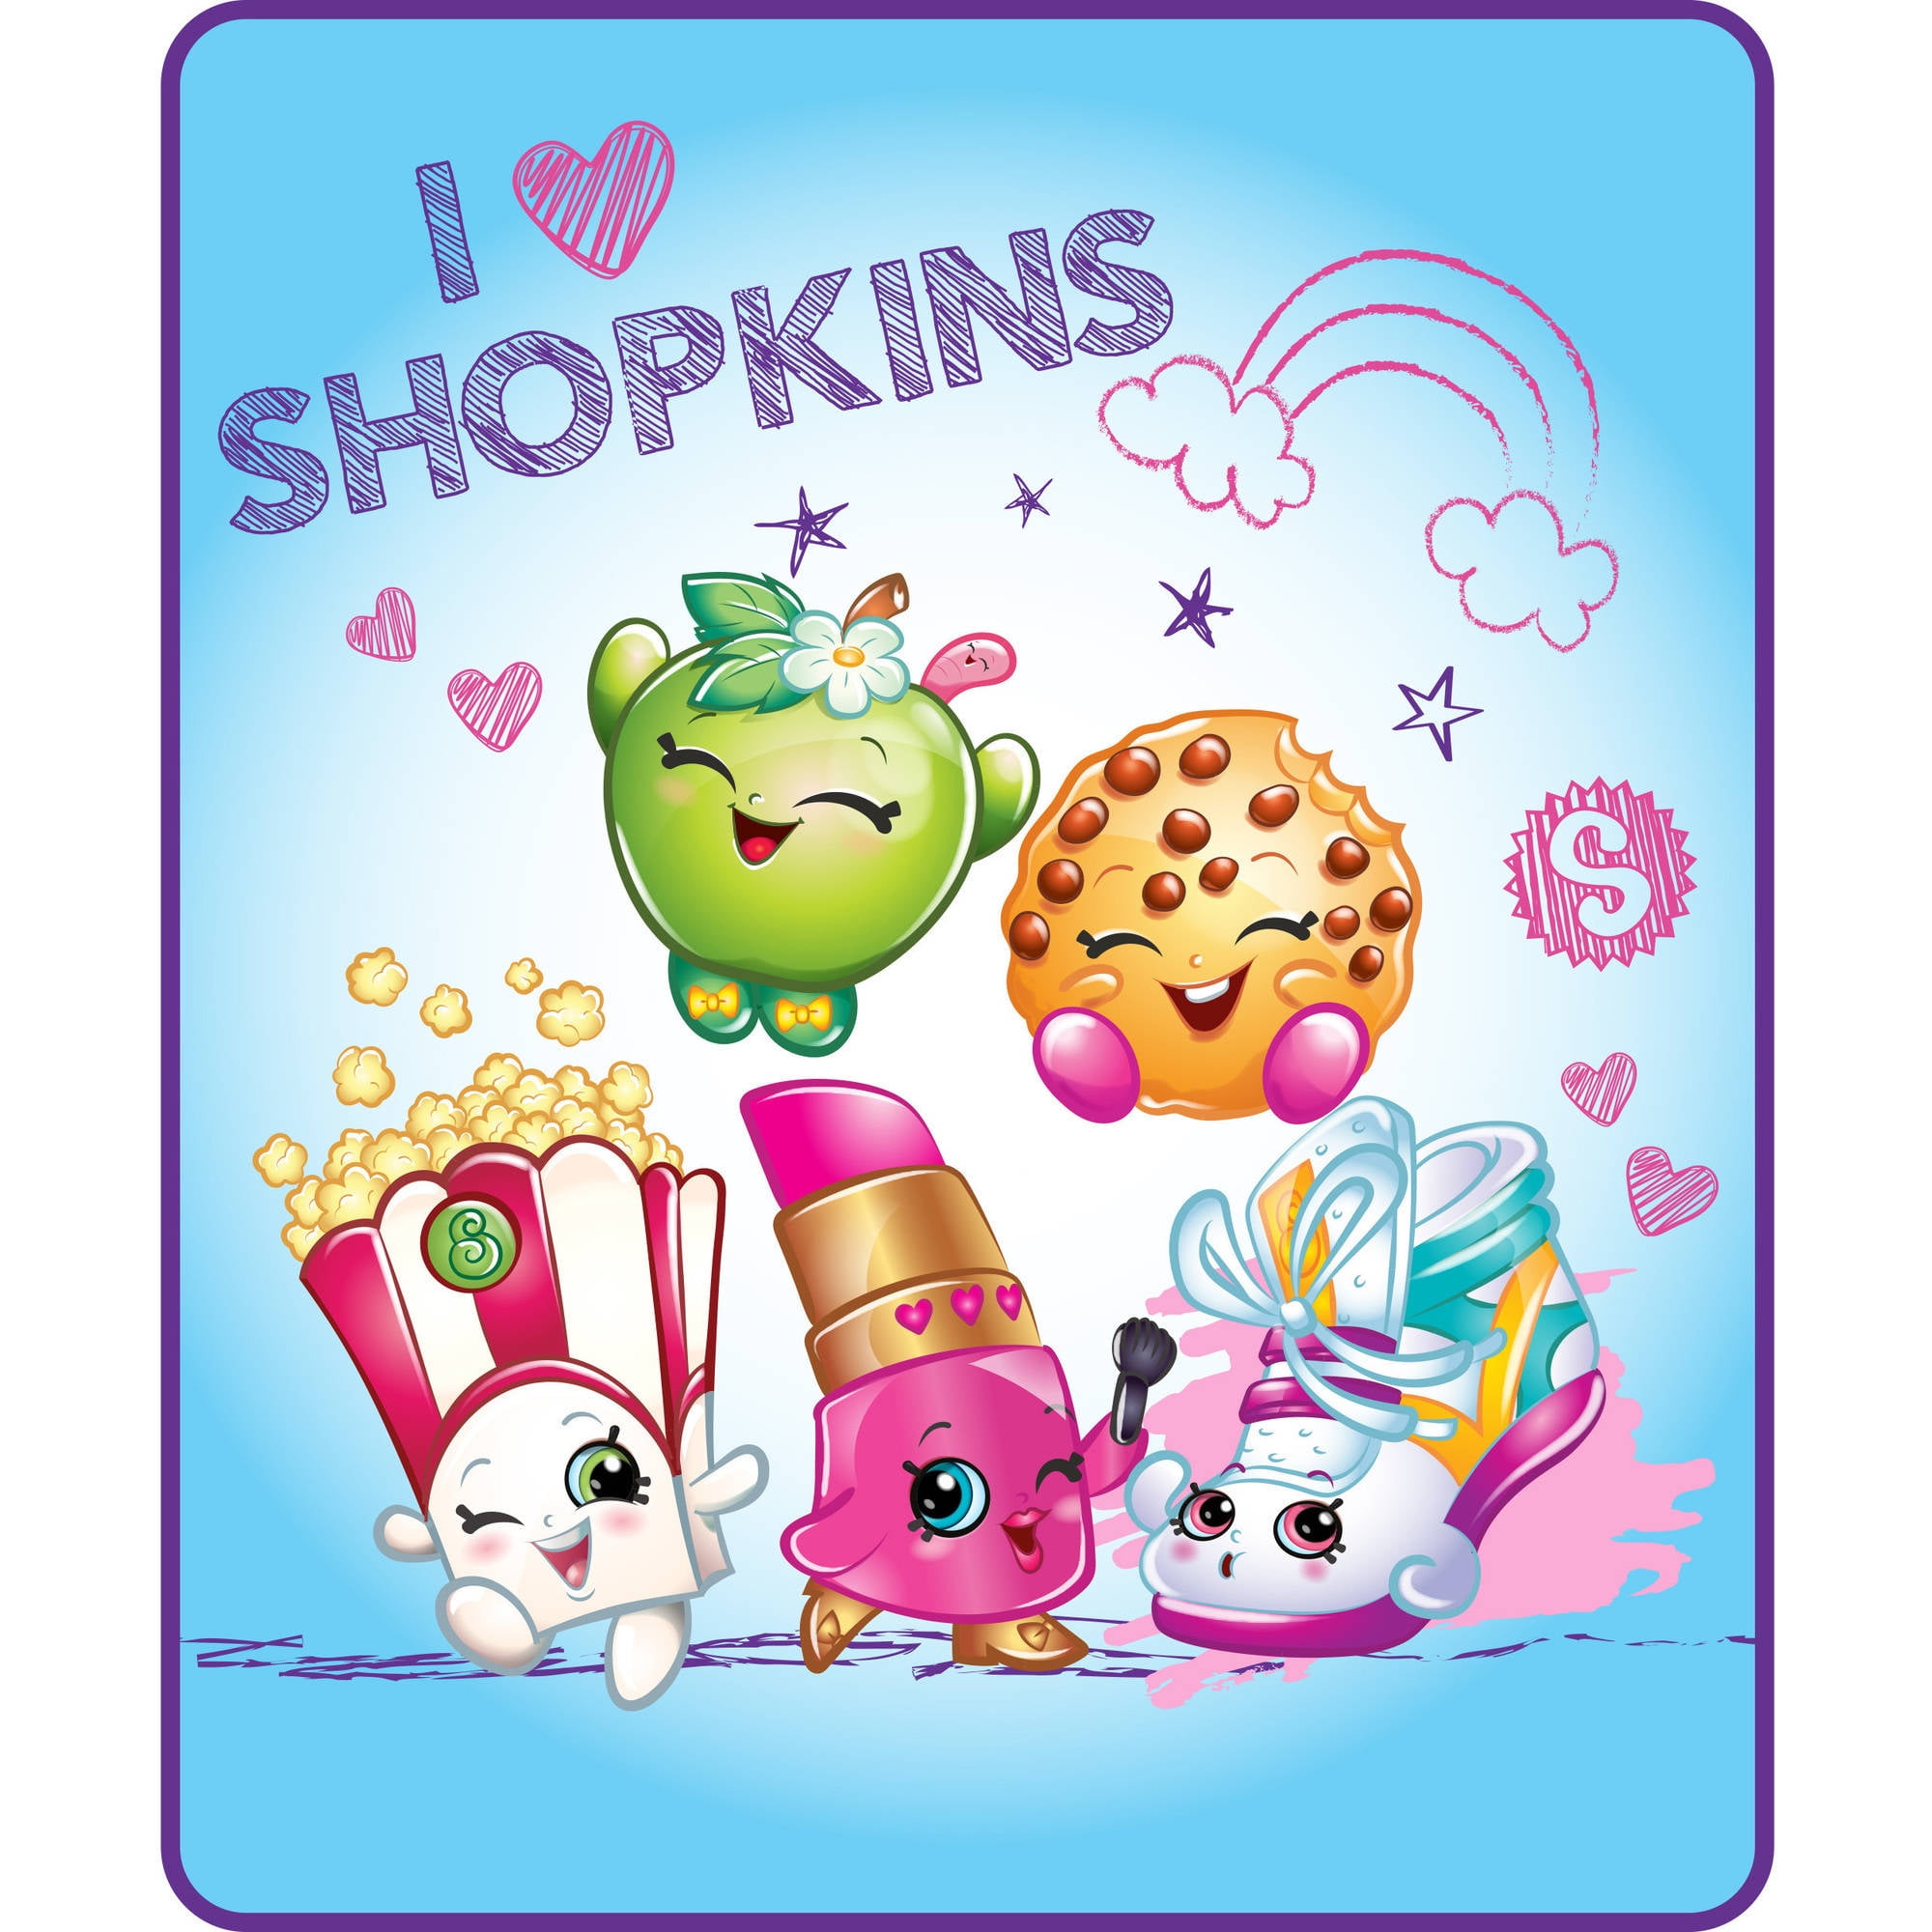 Apple Shopkins "I Love Shopkins" Microfiber Shower Curtain 72" by 72" 